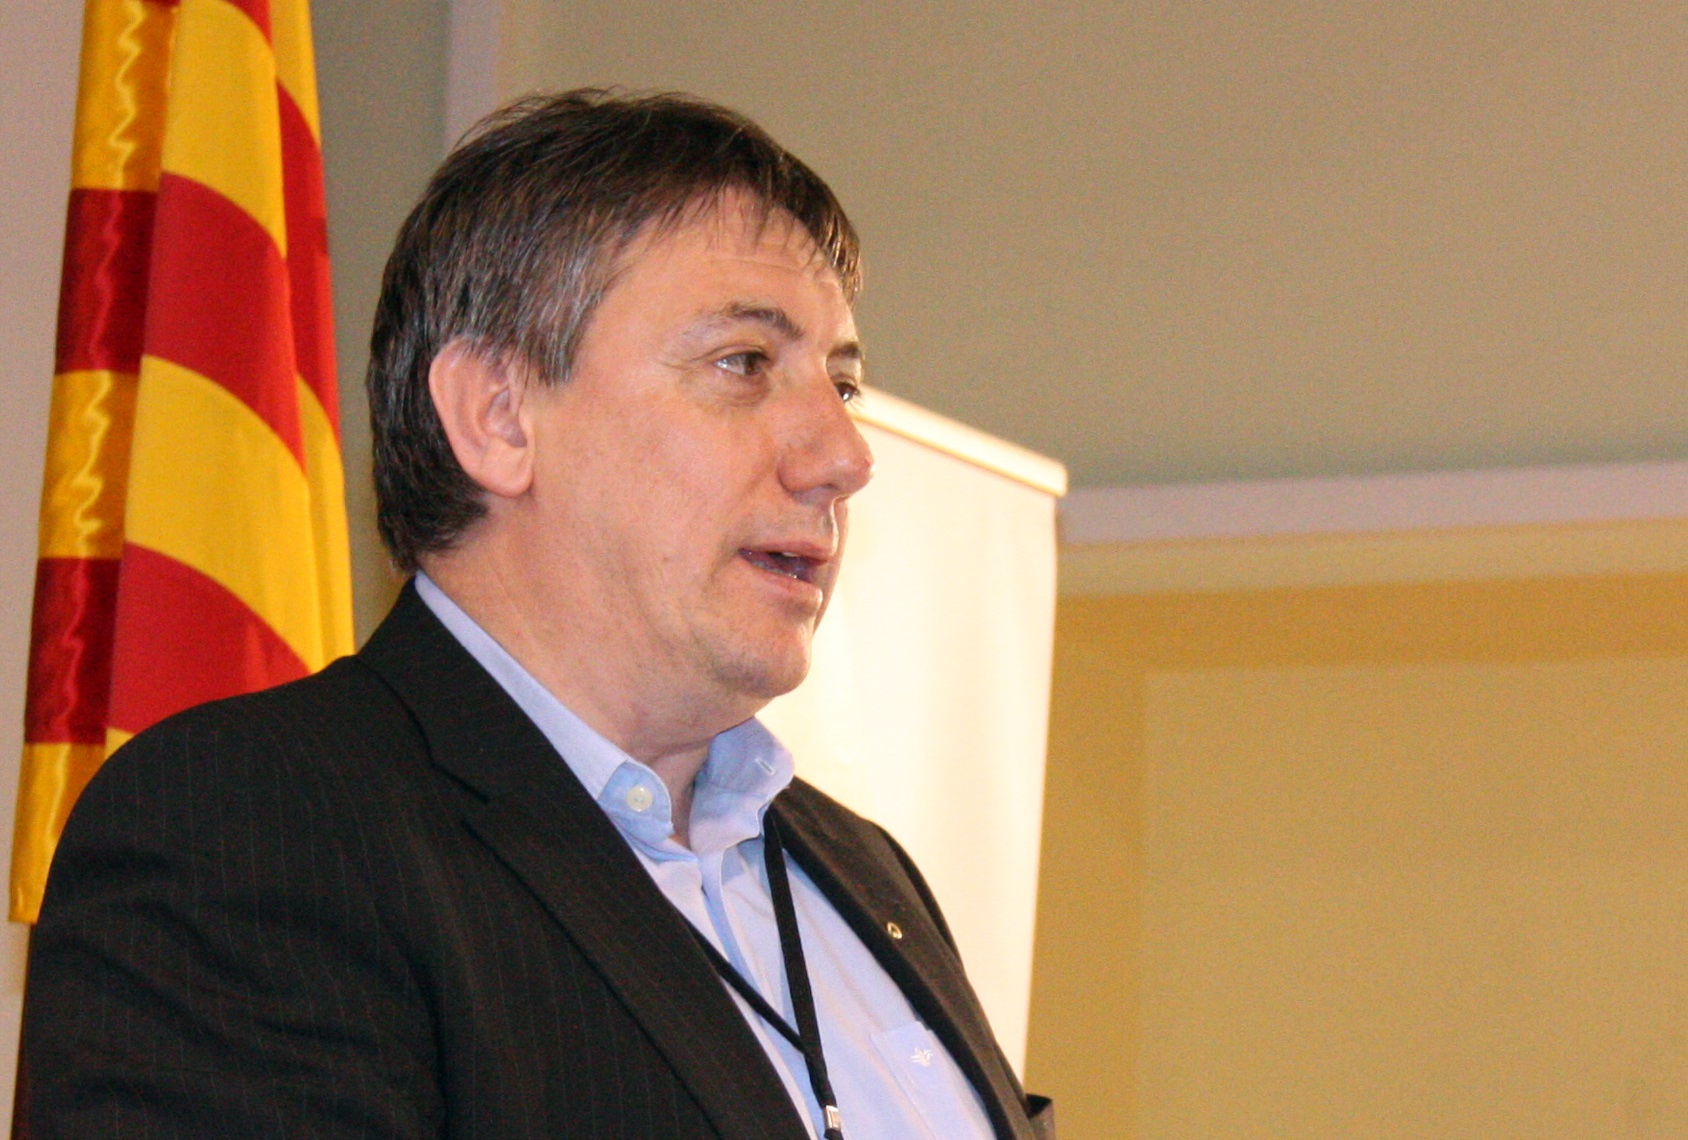 N-VA leader Jan Jambon visited Catalonia in 2011 (by ACN)